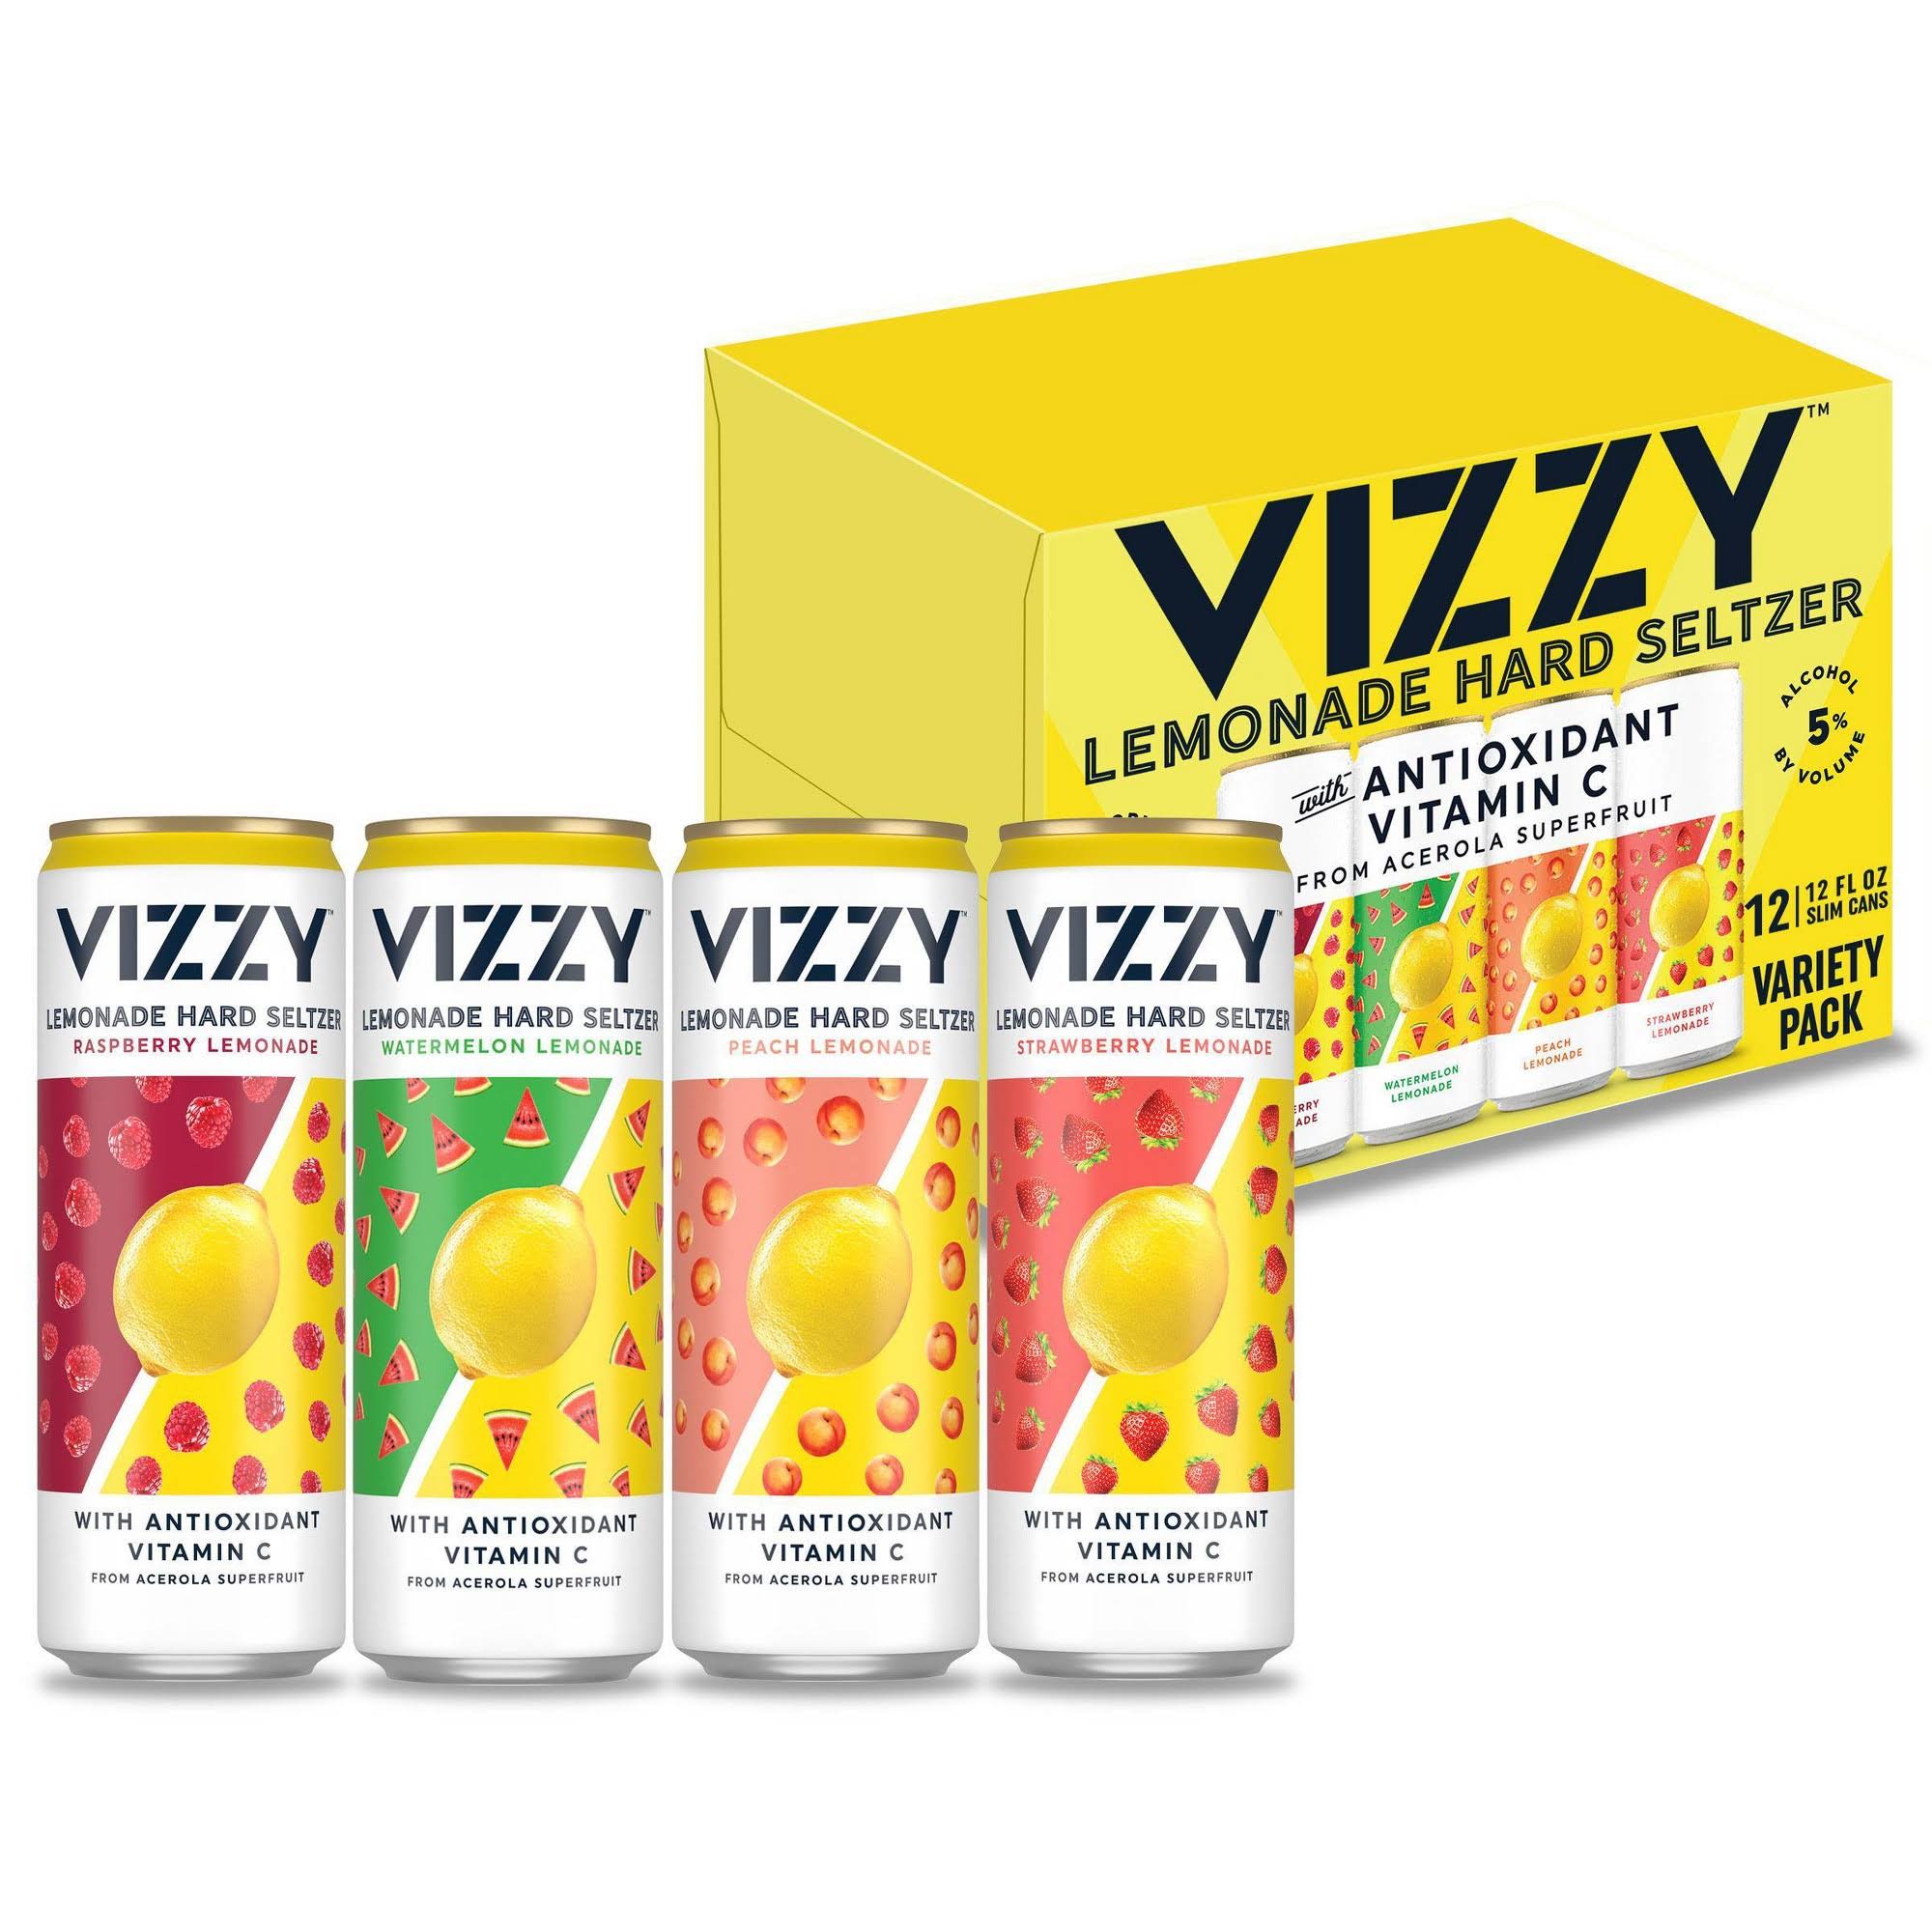 Vizzy Hard Seltzer, Lemonade, Variety Pack, 12 Pack - 12 pack, 12 fl oz cans